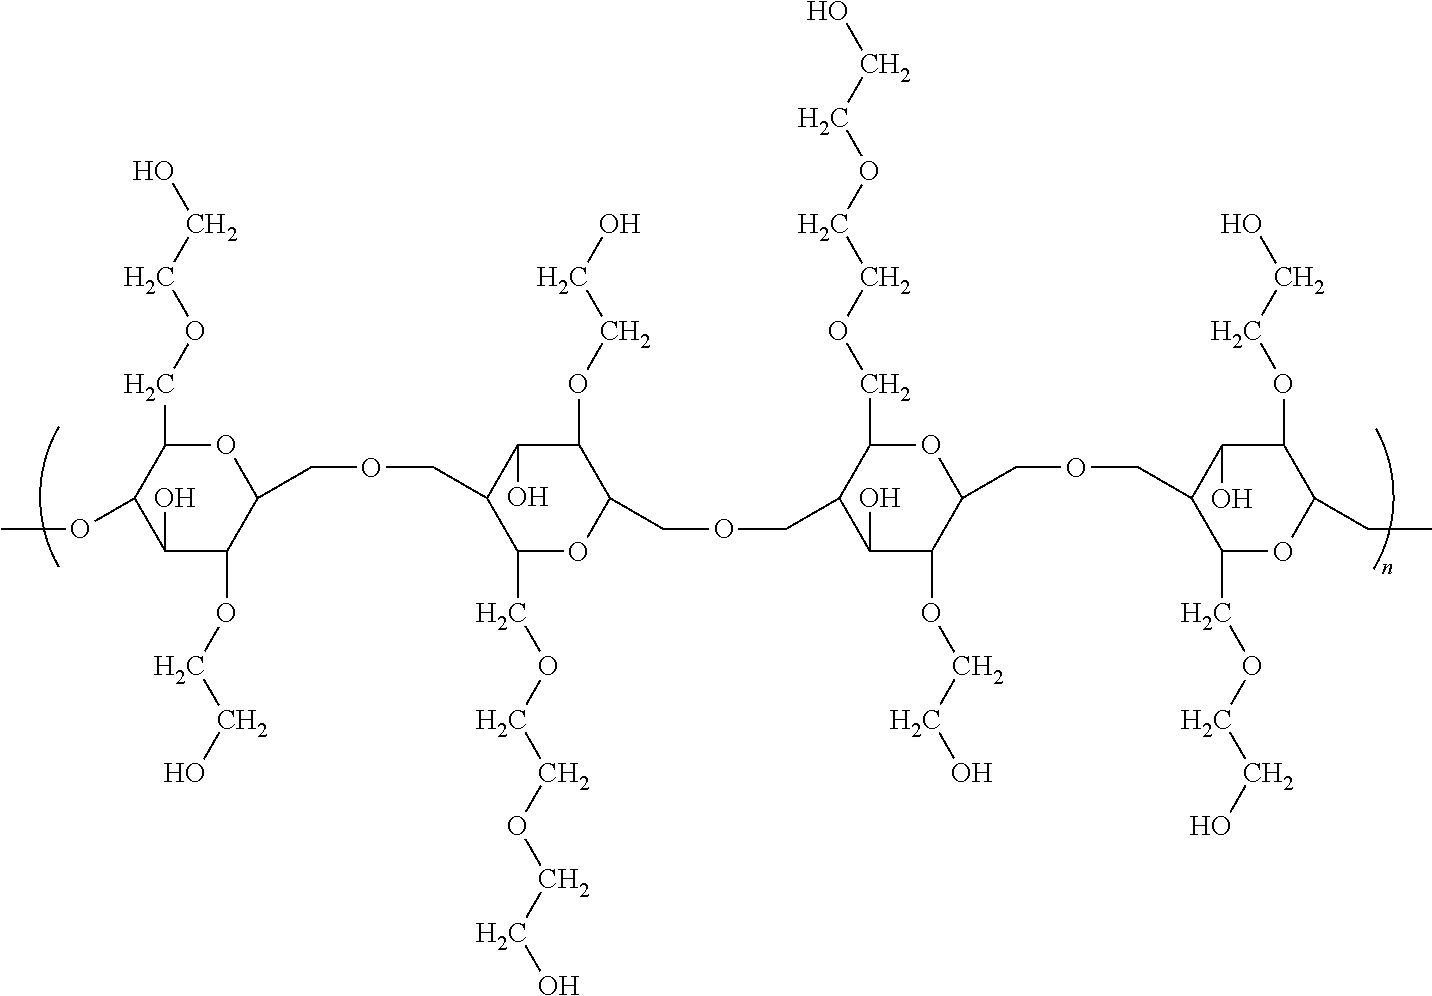 Lactofen and dicamba diglycol amine liquid formulations